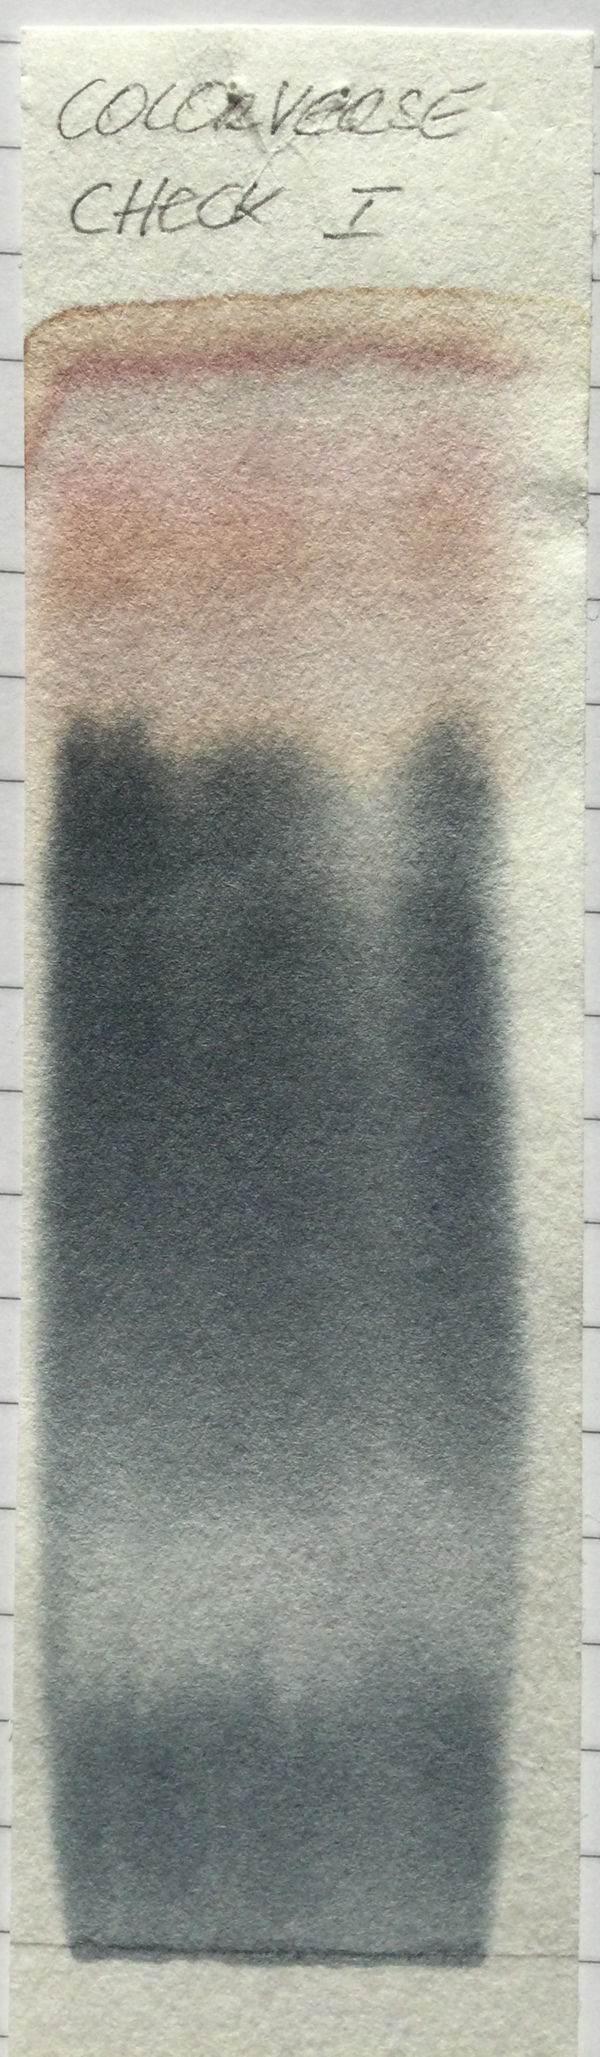 Colorverse-Check-Chromatogramm-Brunnen-Leitungswasser.jpg